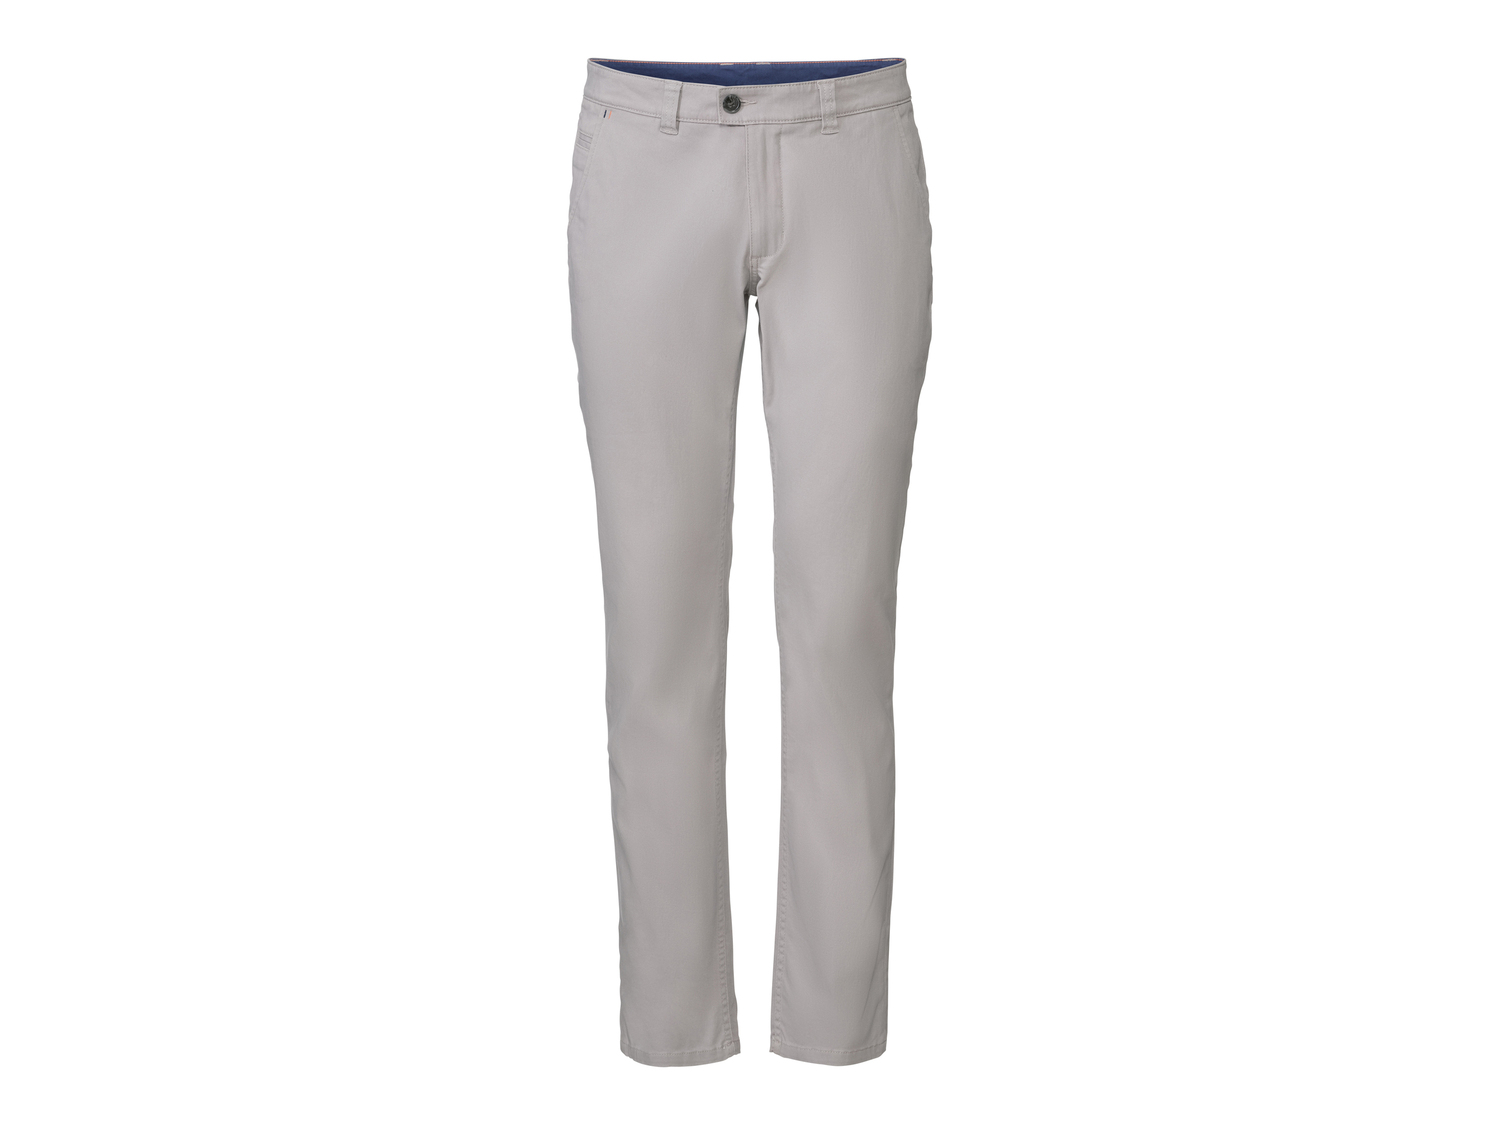 Pantaloni Slim Fit da uomo Livergy, prezzo 12.99 &#8364; 
Misure: 46-56
Taglie ...